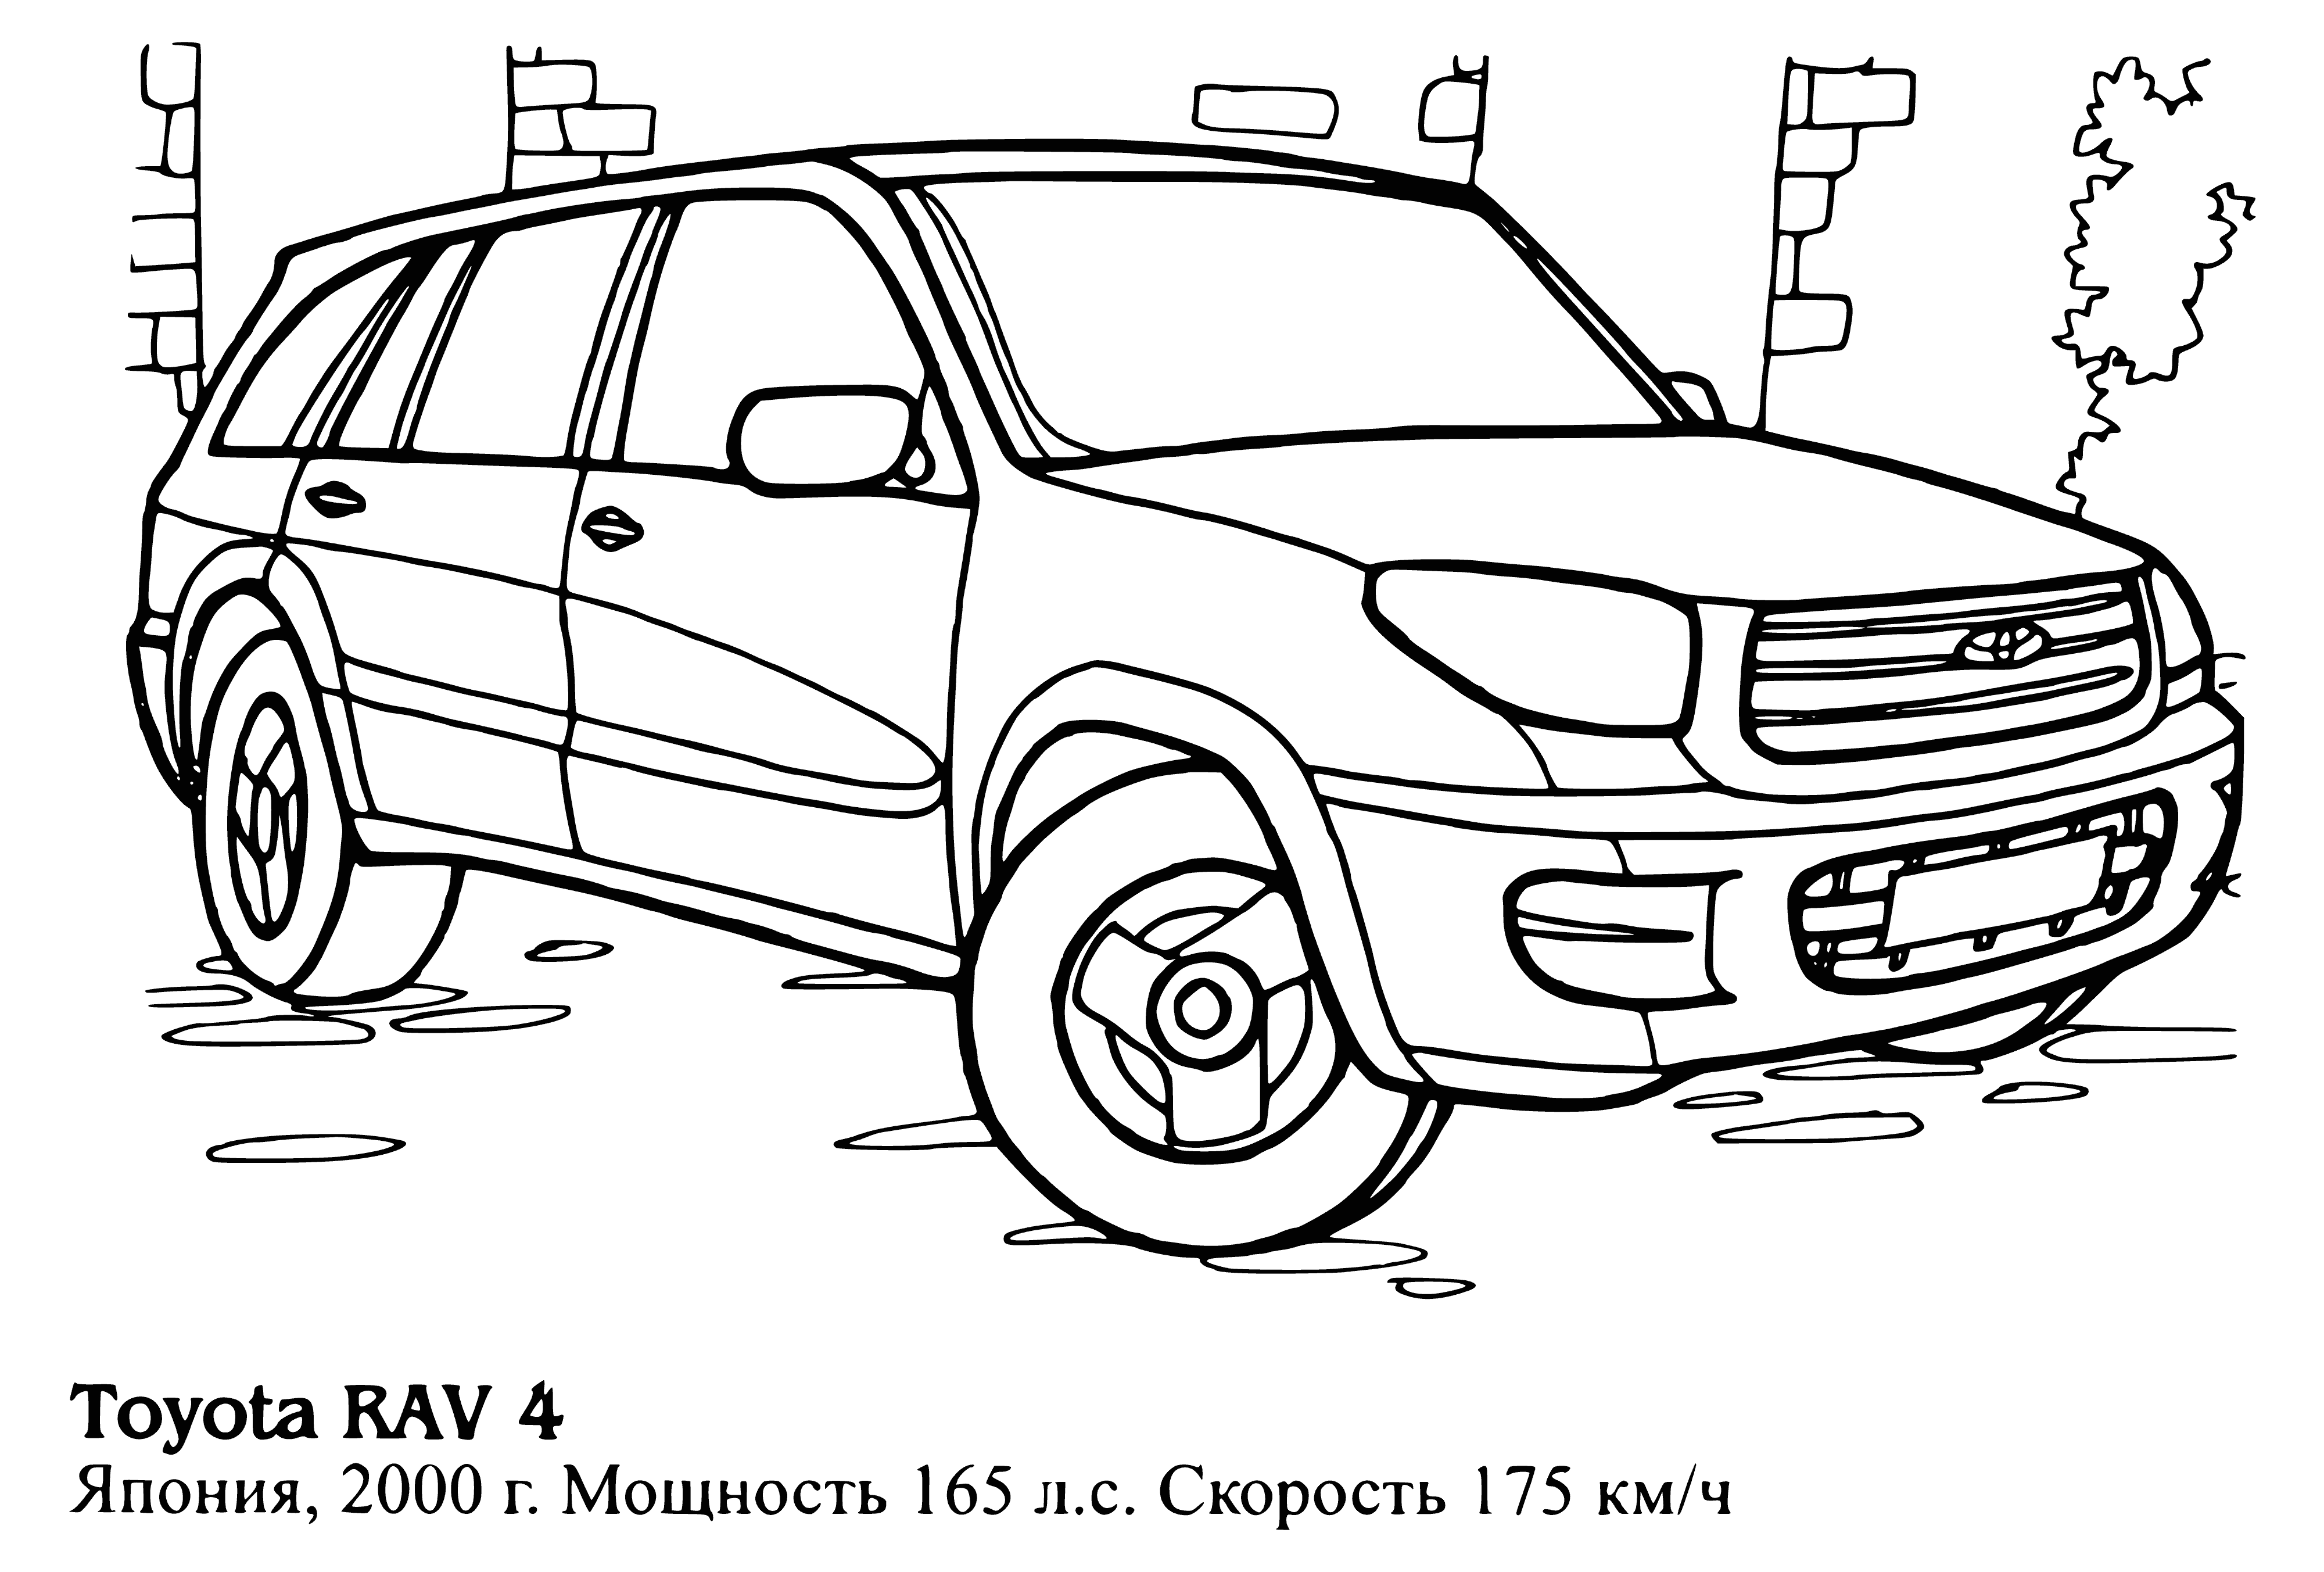 Toyota RAV 4 coloring page